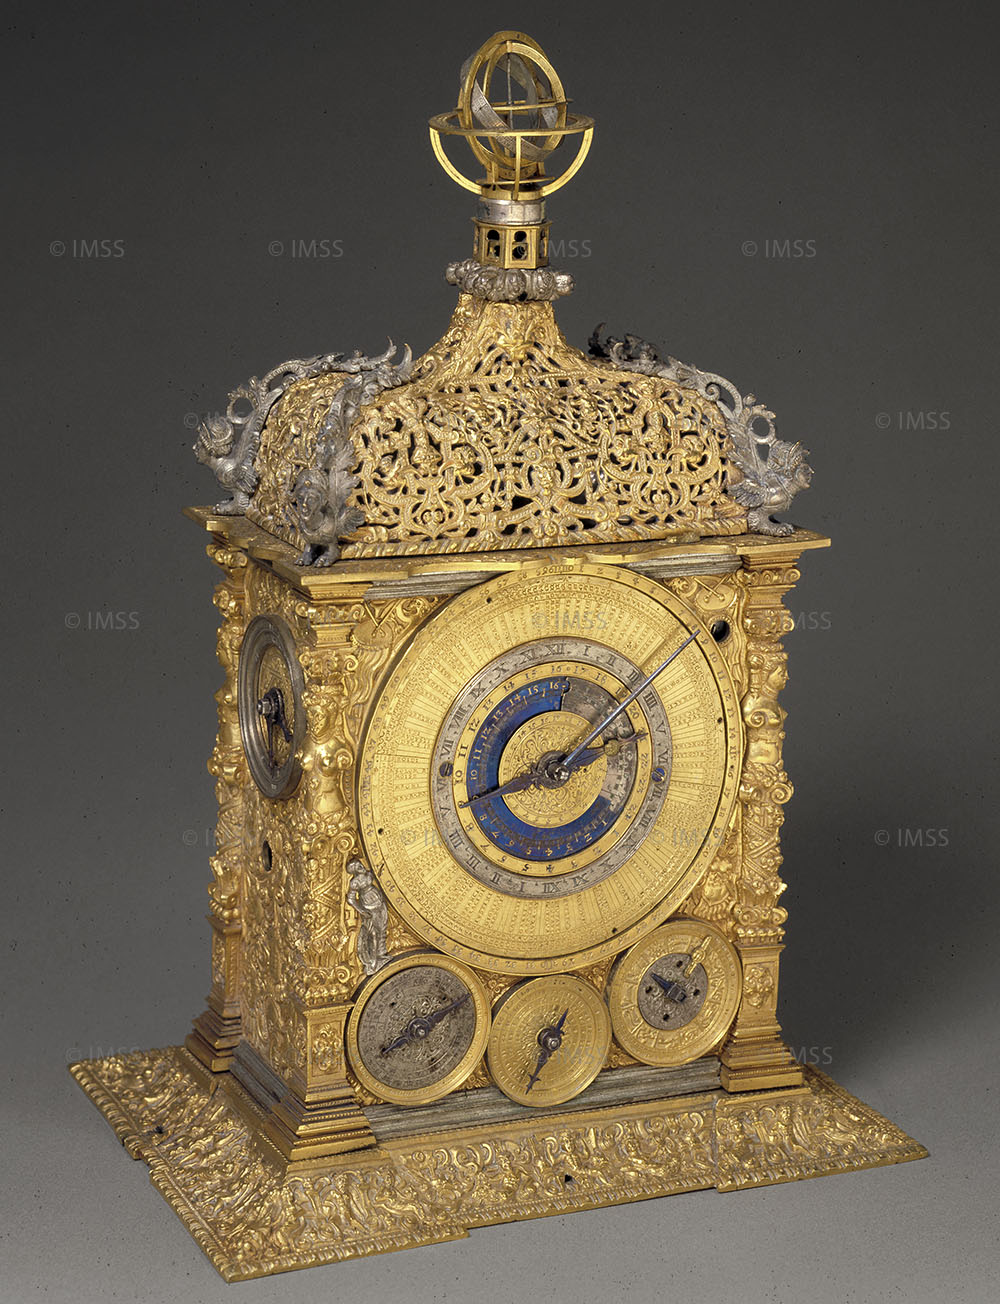 Caspar Rauber (attr.), Astronomical table clock